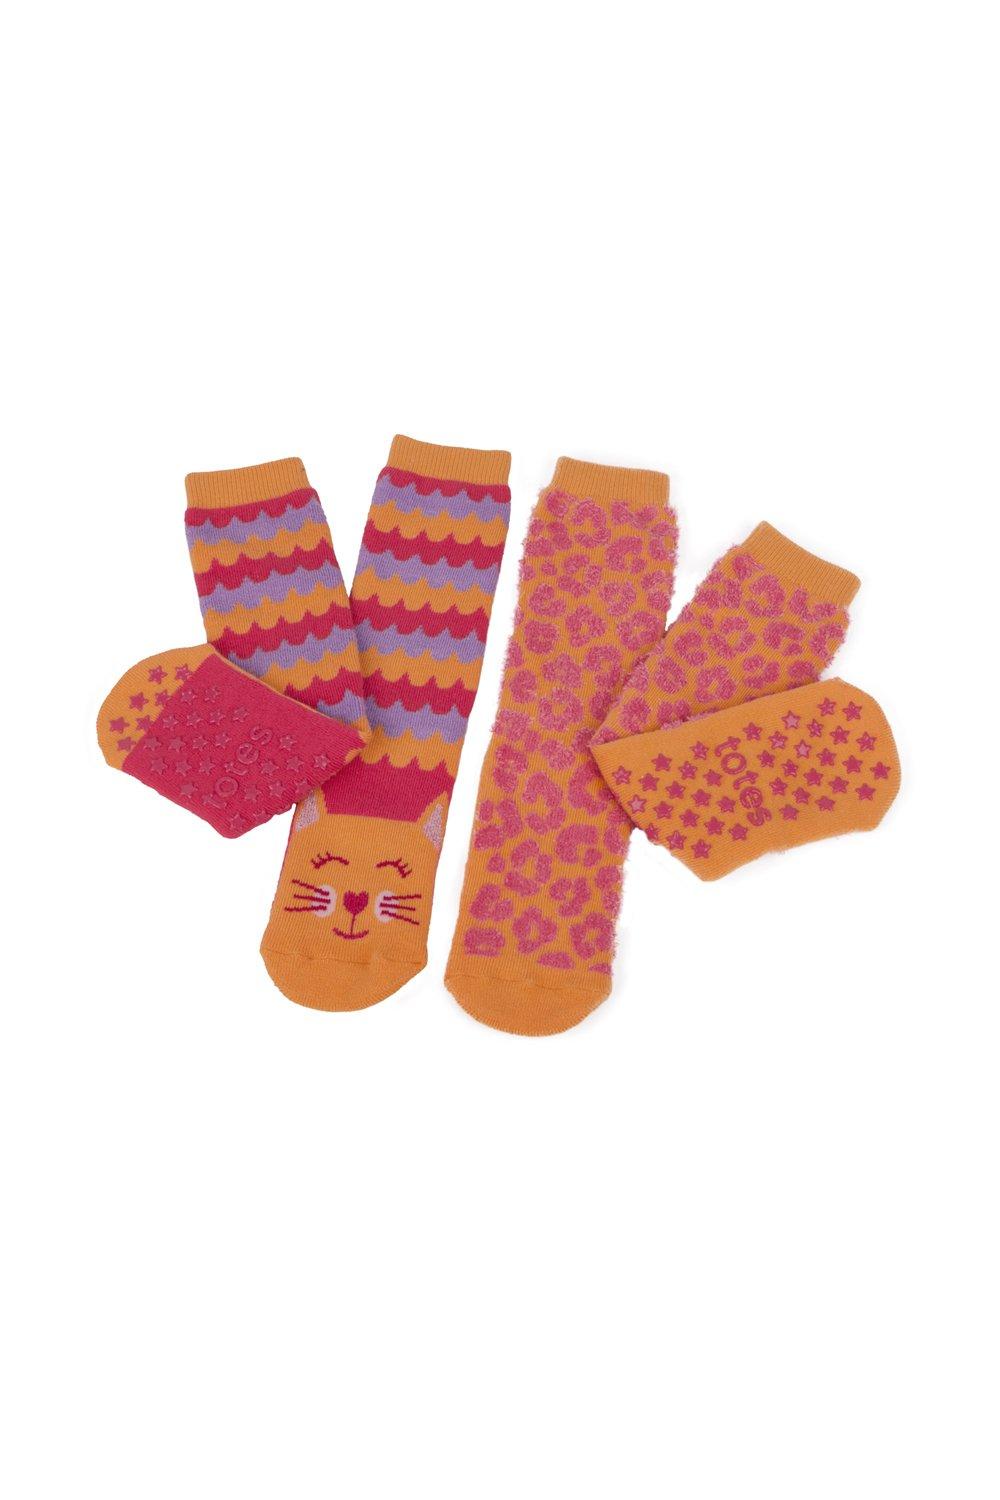 totes toasties Kids Original Novelty Slipper Socks (Twin Pack)